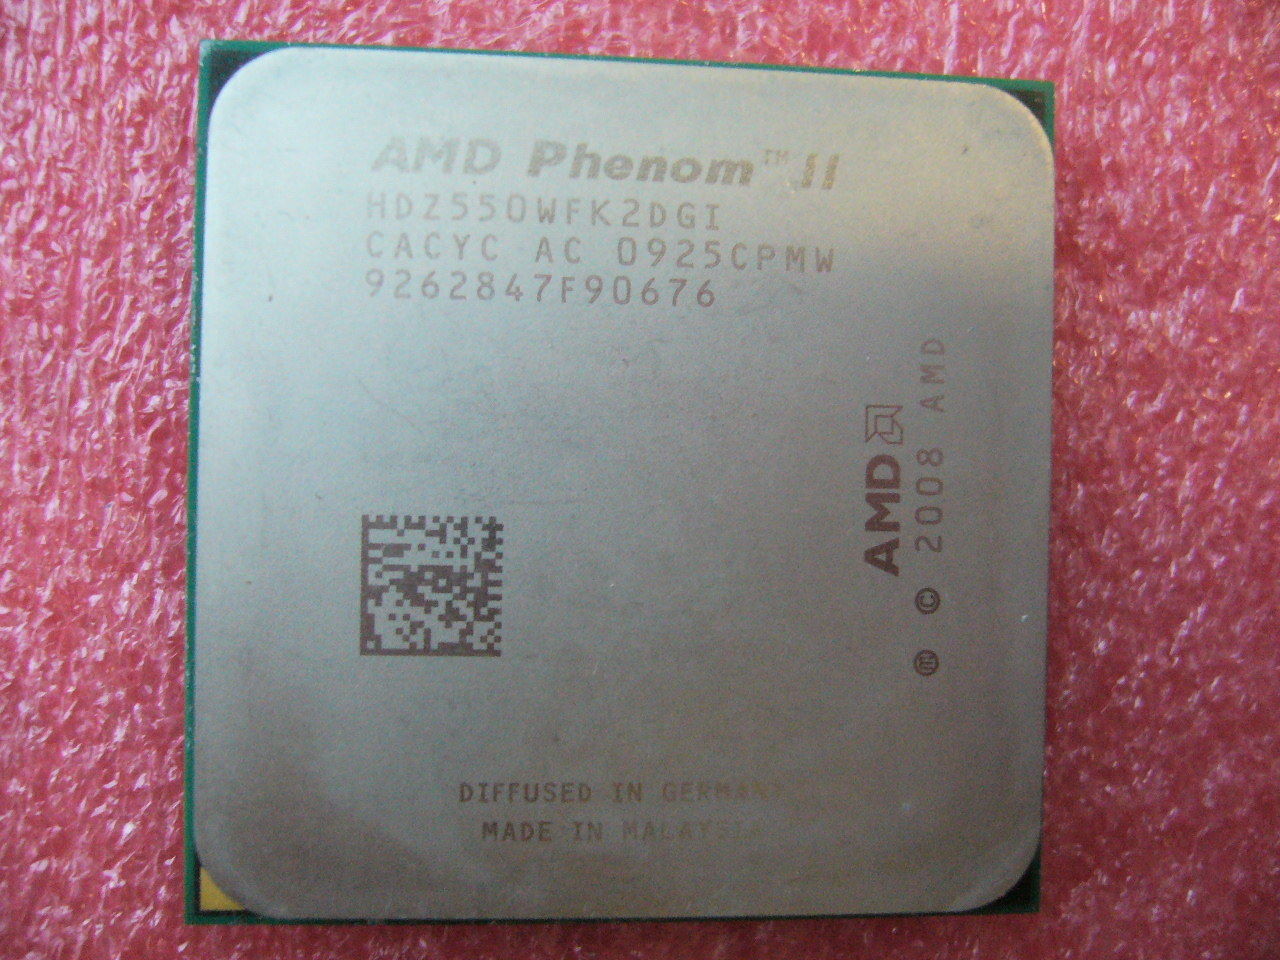 QTY 1x AMD Phenom II X2 550 3.1GHz Dual-Core (HDZ550WFK2DGI) CPU Socket AM3